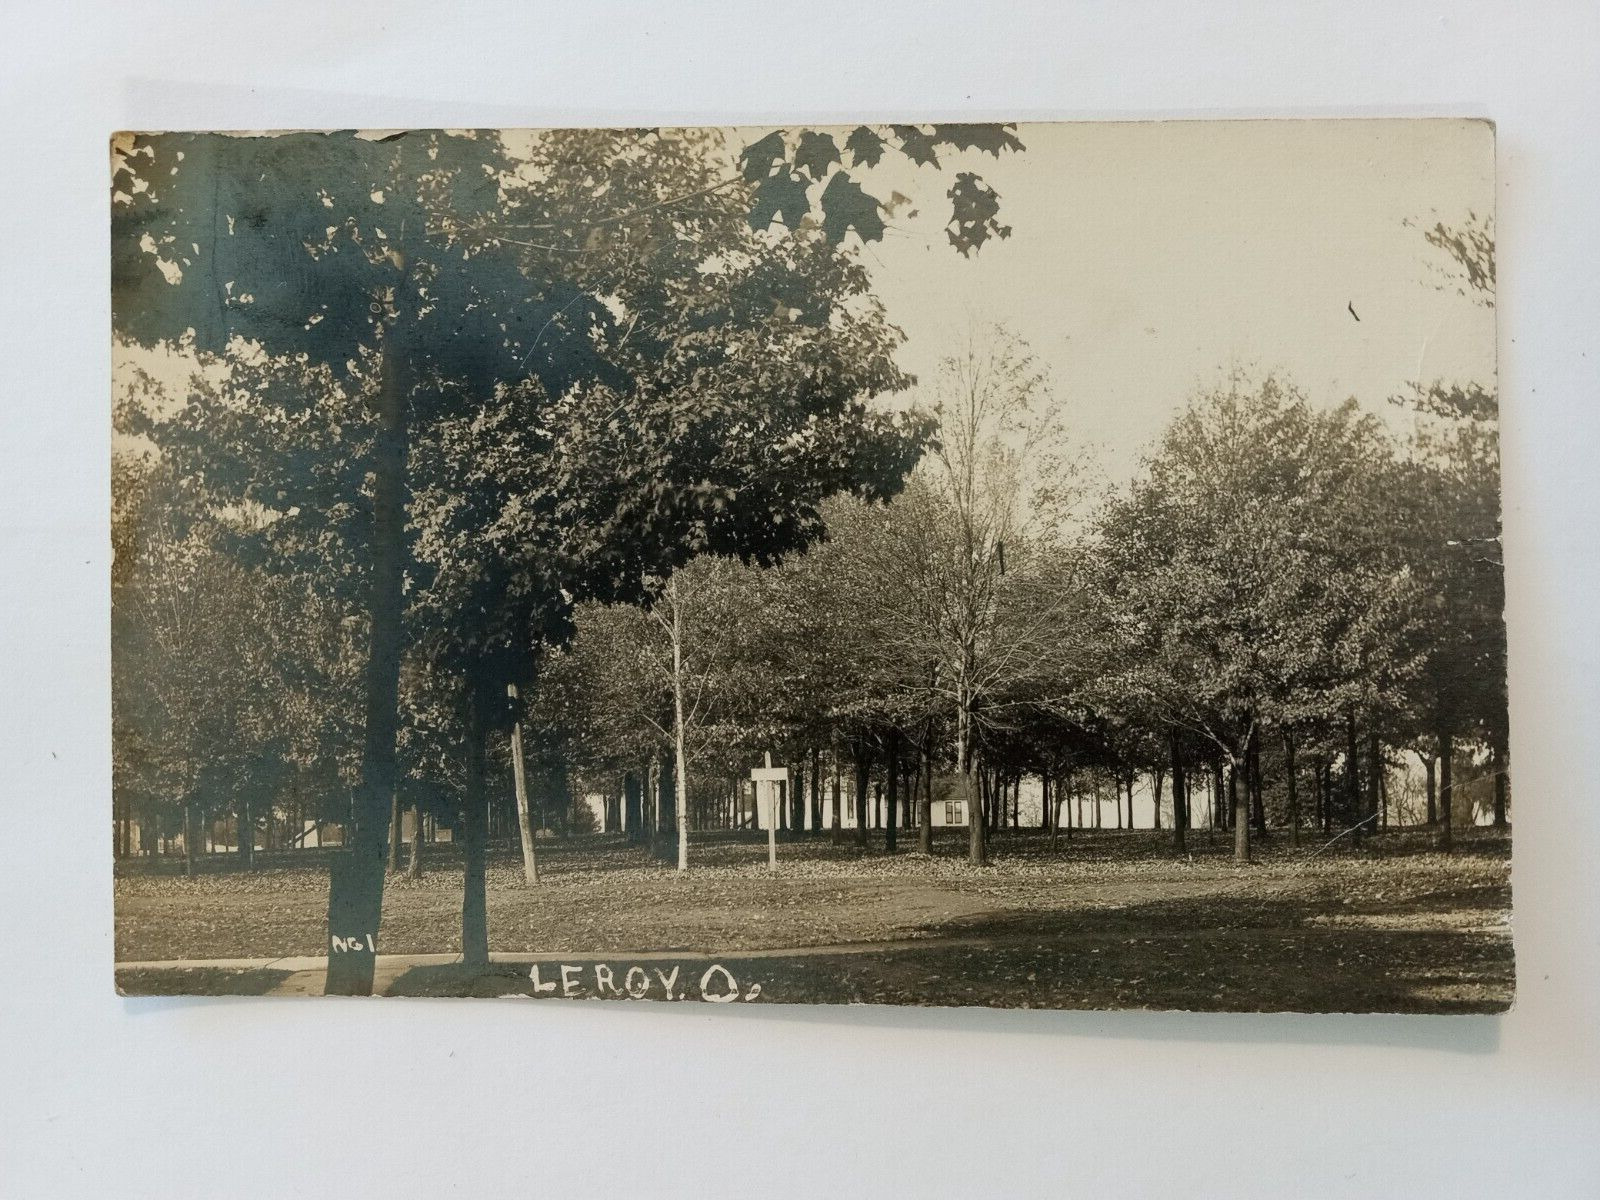 LEROY GEAUGA LAKE COUNTY OHIO REAL PHOTO POSTCARD 1910 PARK? TREE GROVE